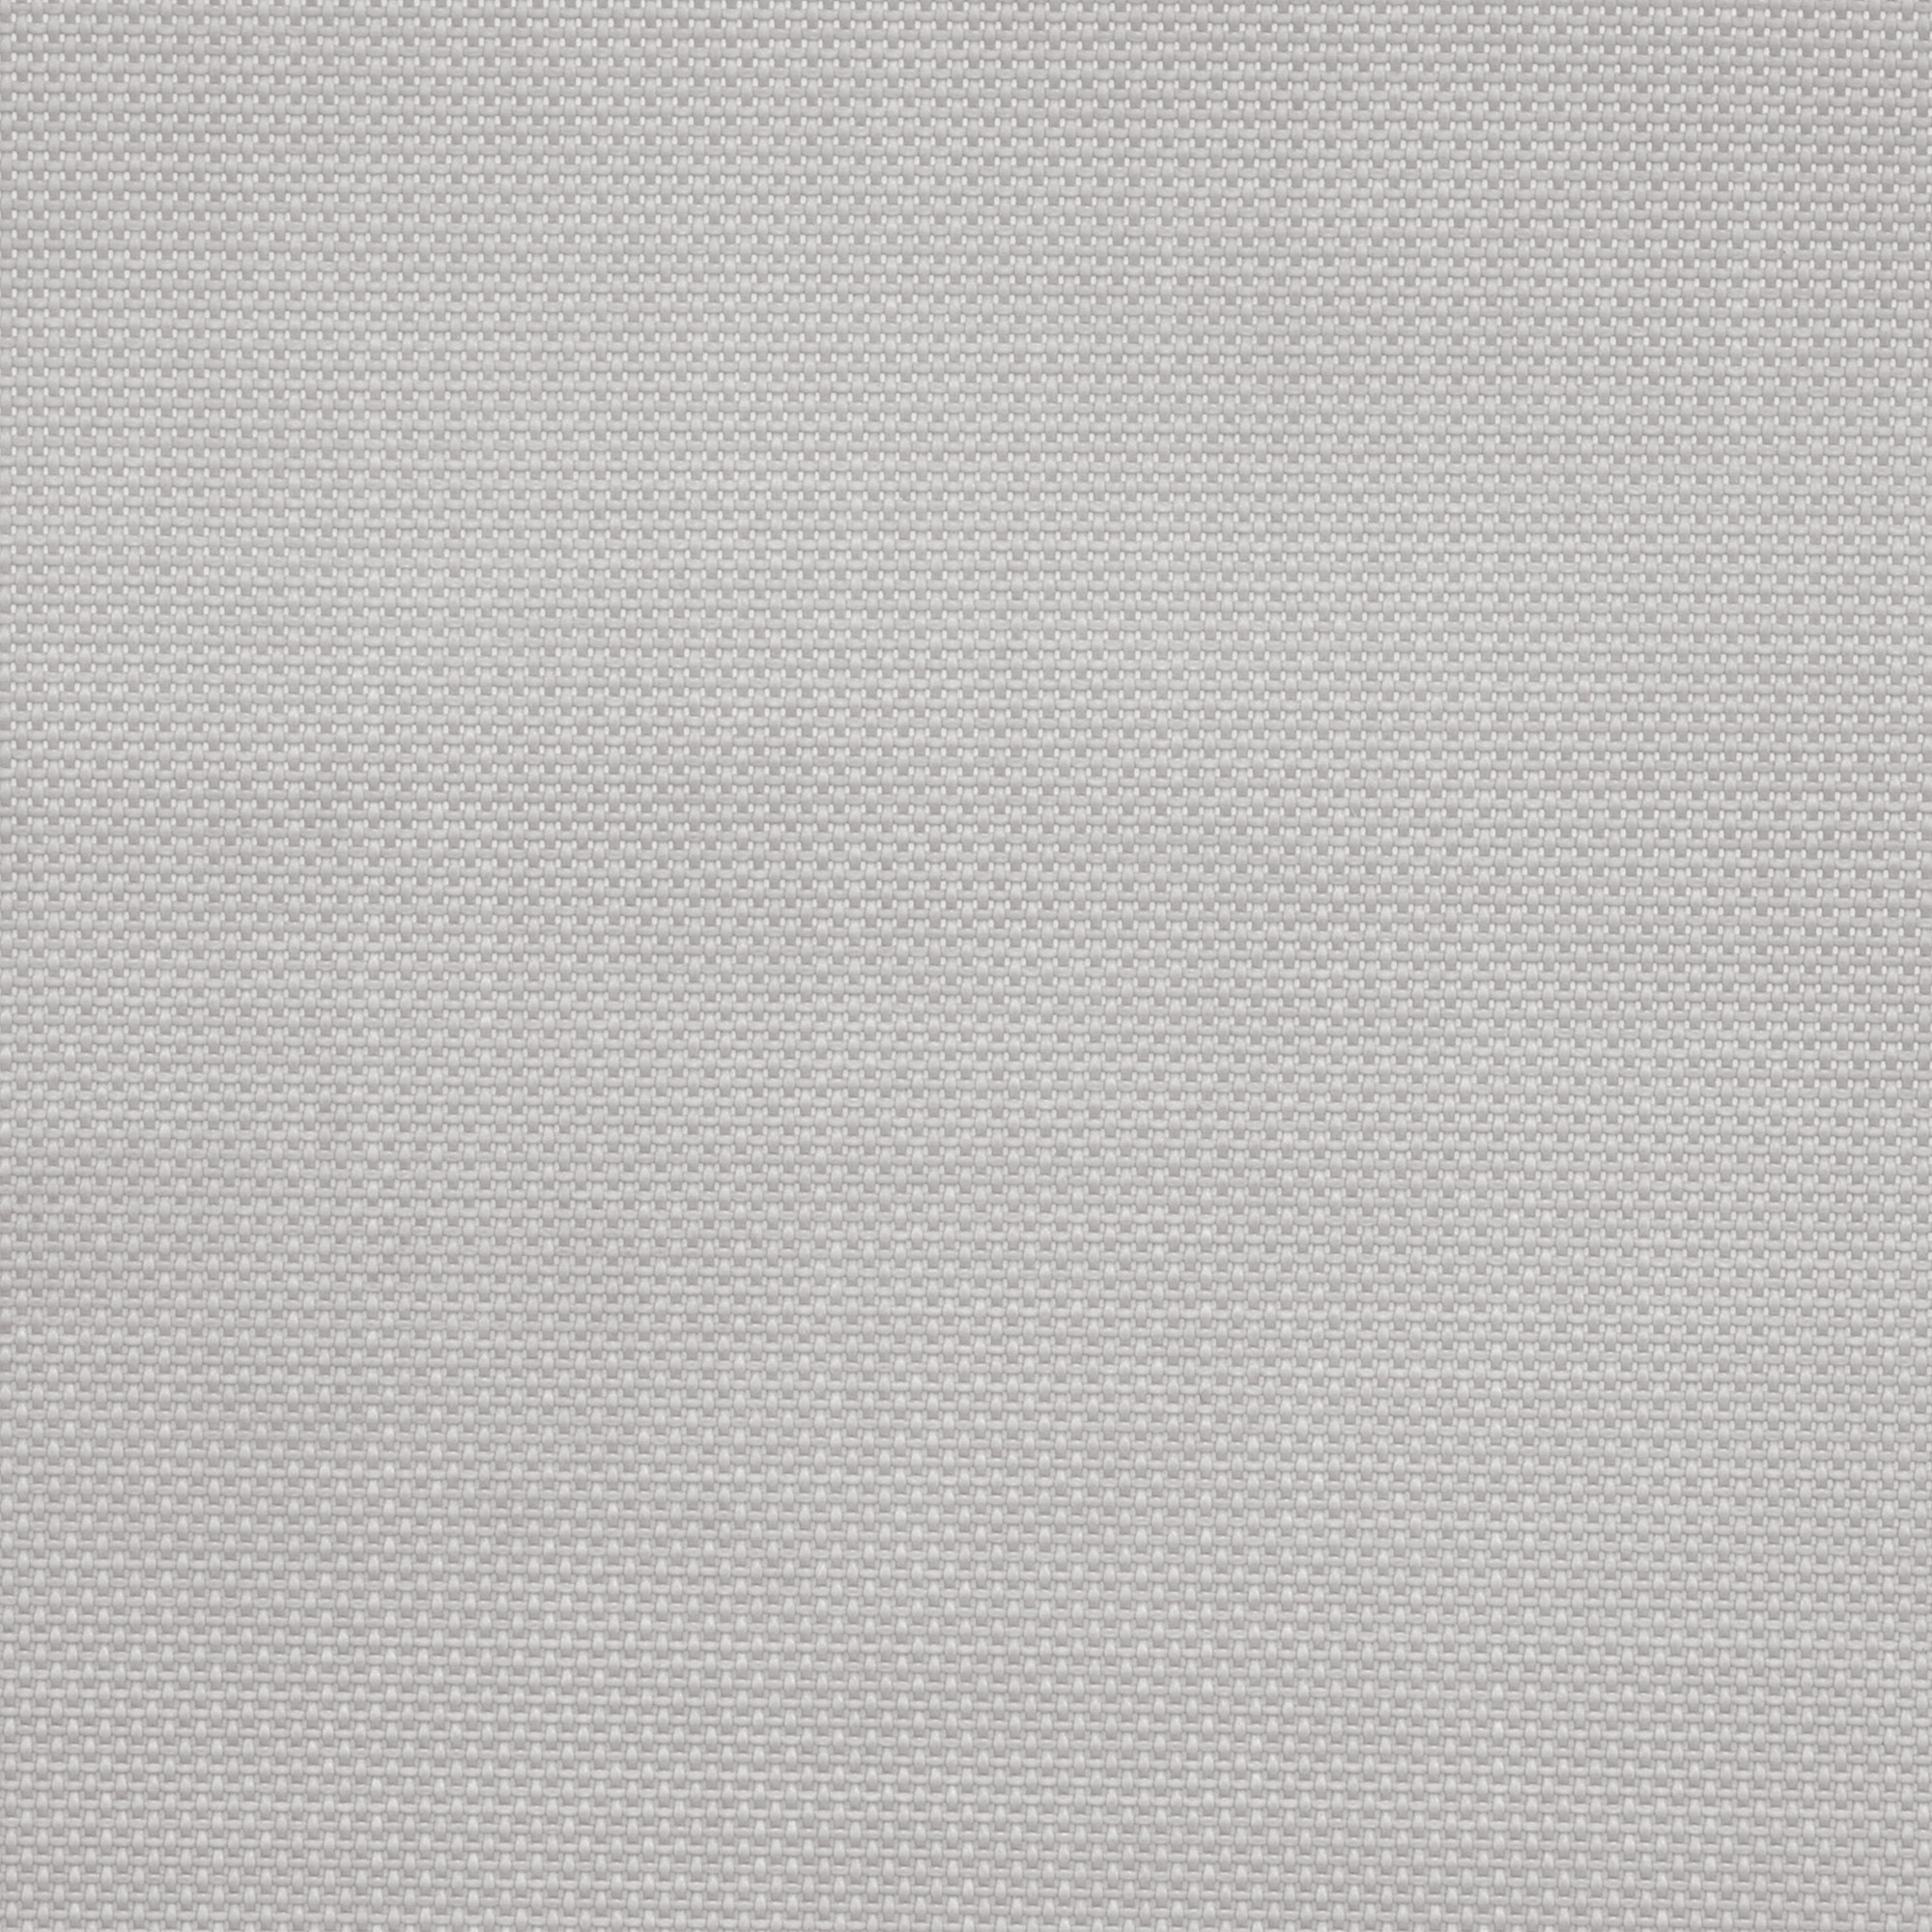 Комплект мебели Leesun Nano светлый, цвет серый, размер 160/220/280х100х74 - фото 13